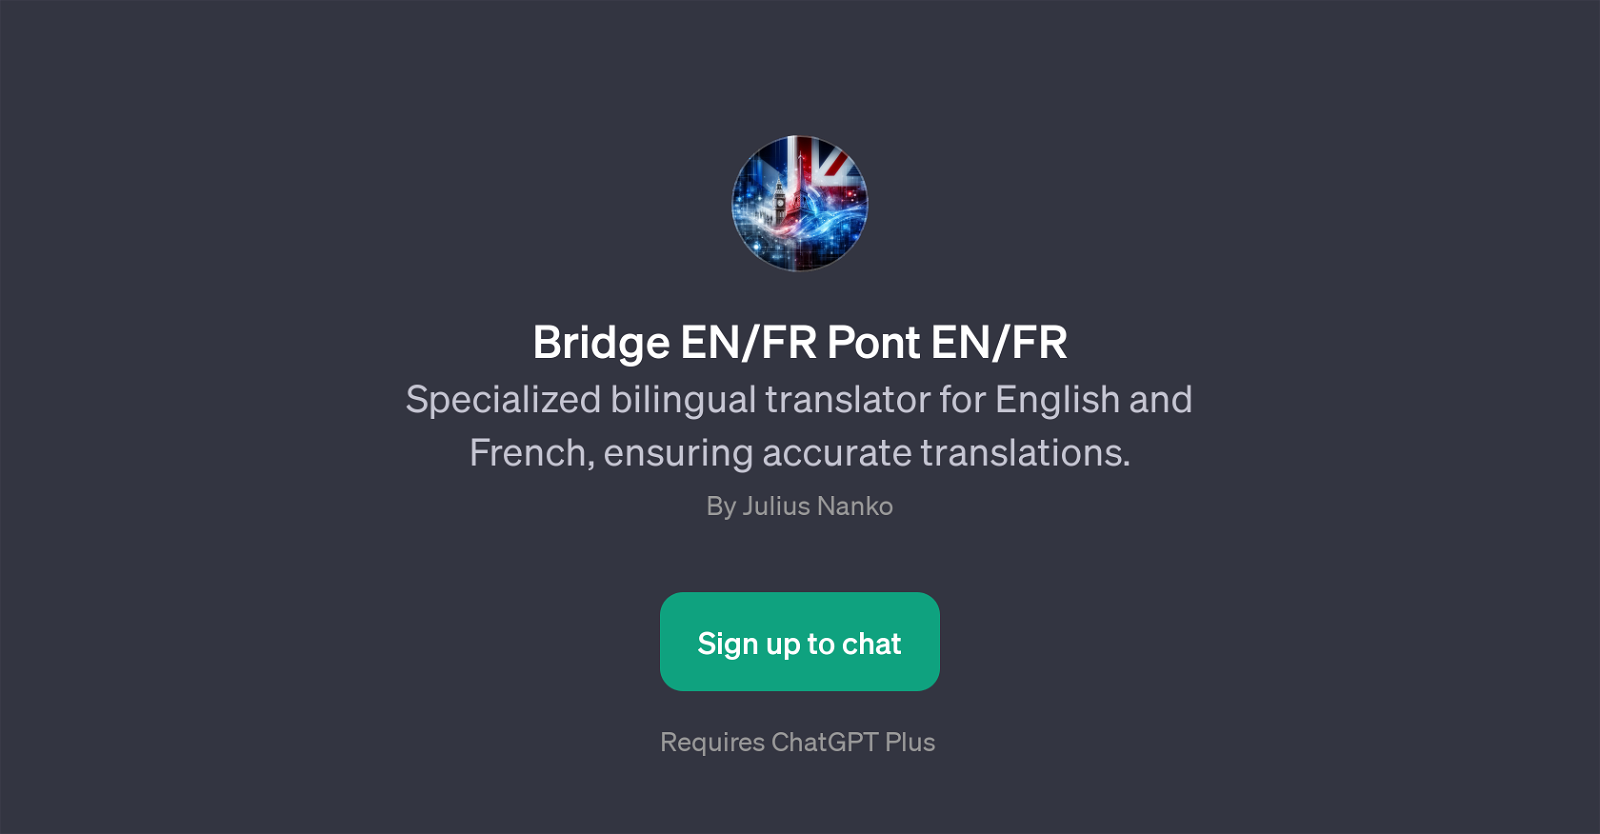 Bridge EN/FR Pont EN/FR website